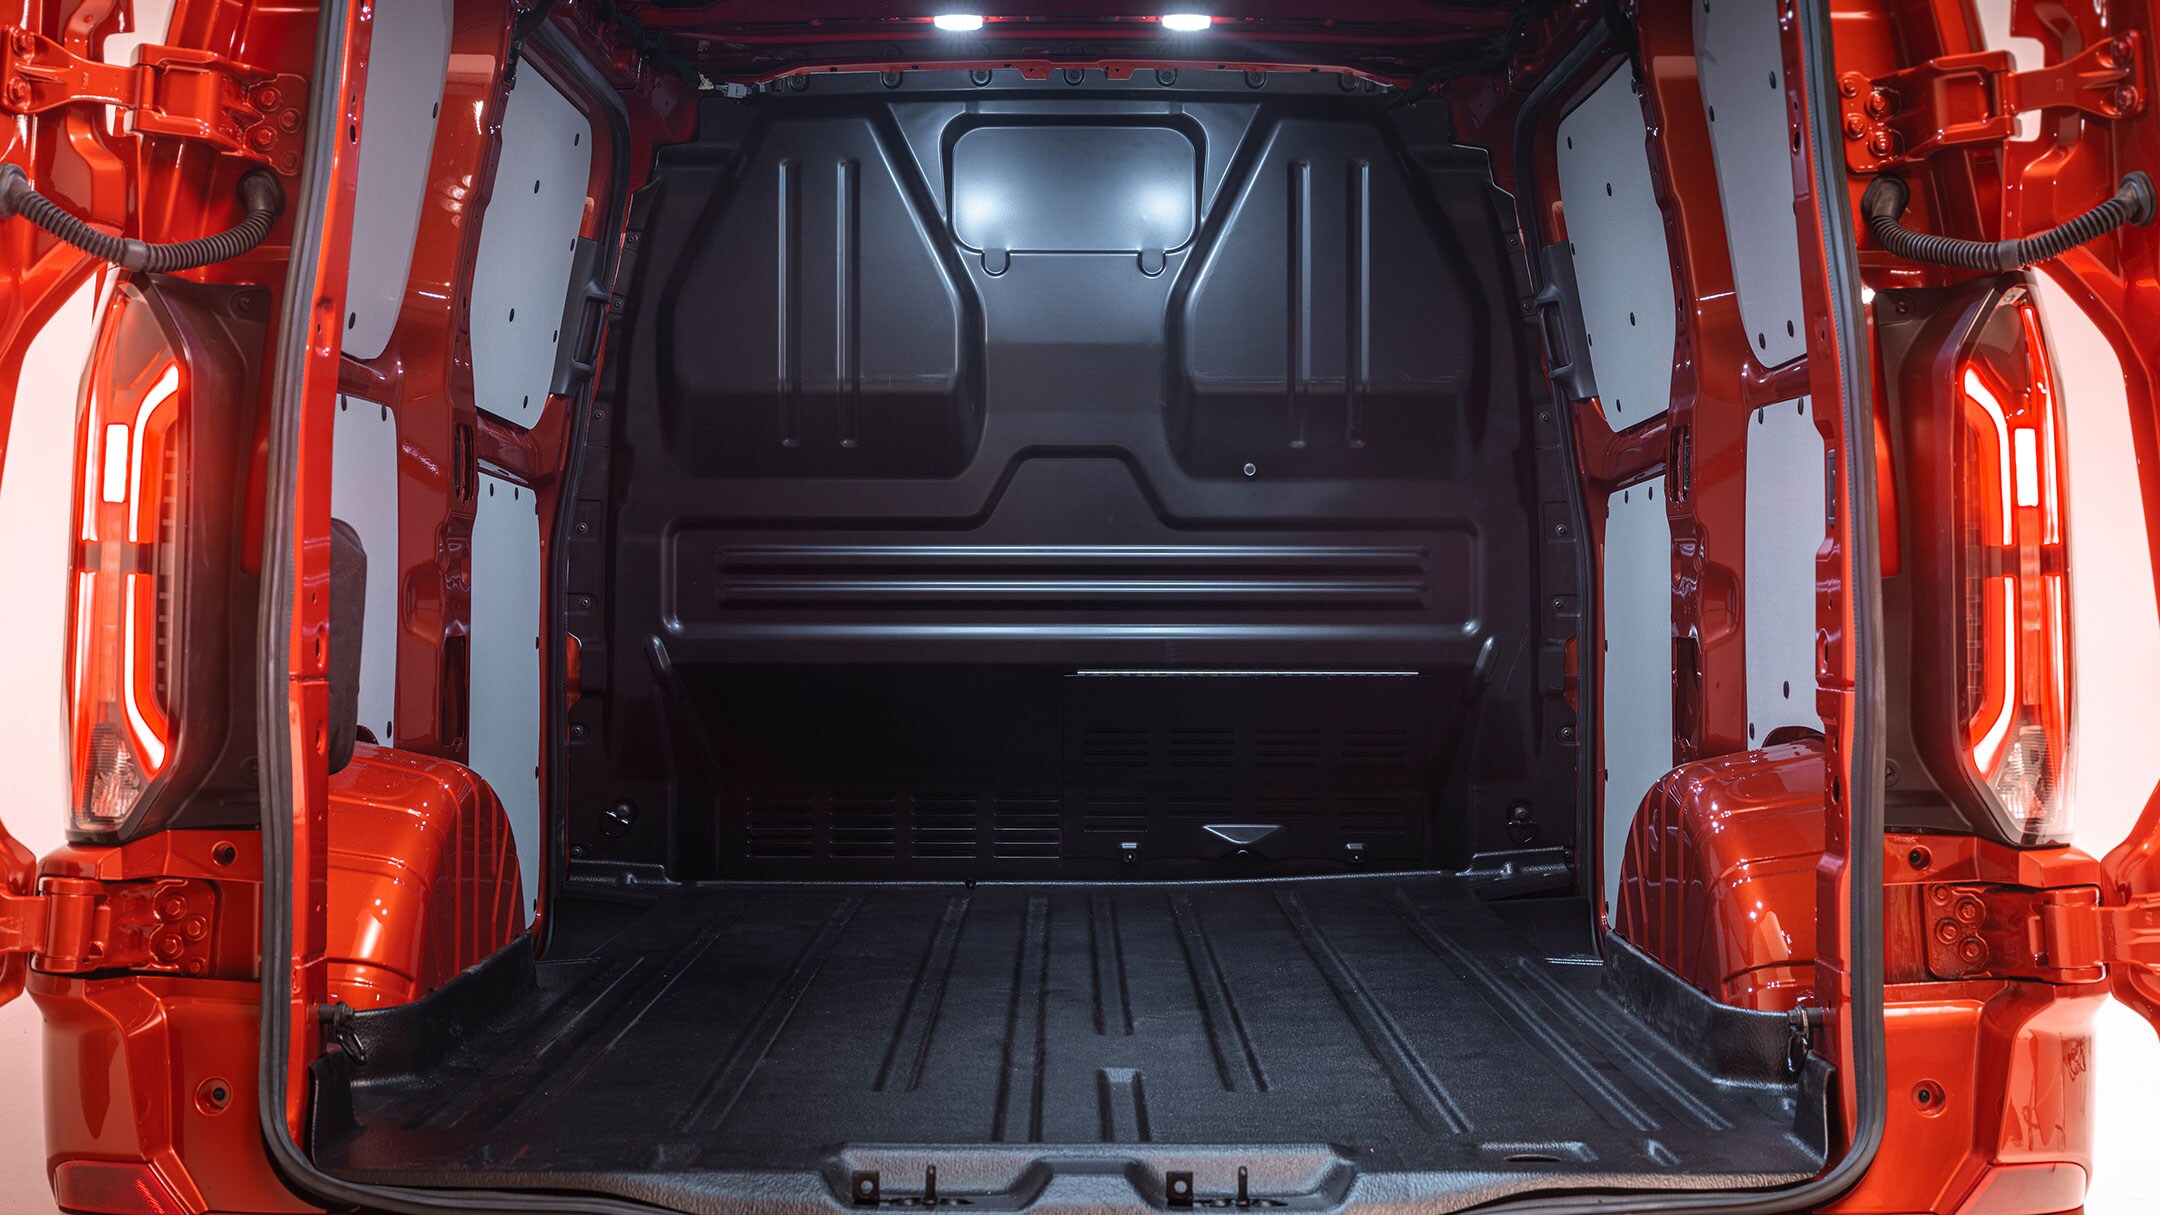 Ford Transit Cusom Sport interior seating